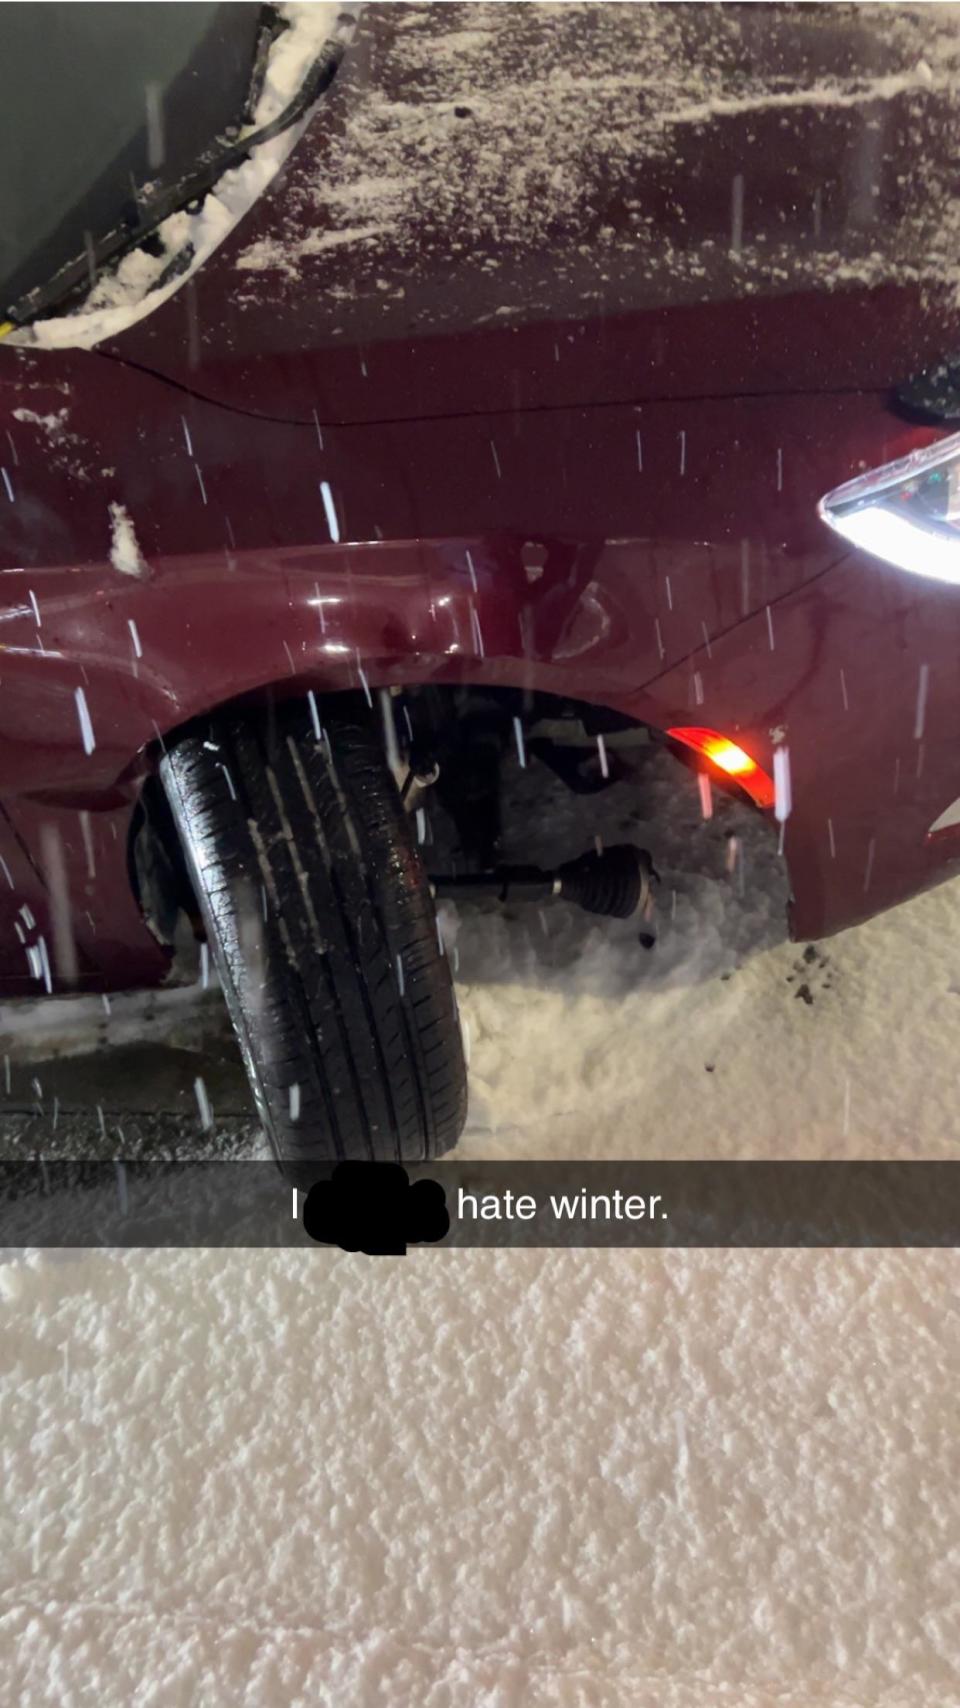 "I hate winter"